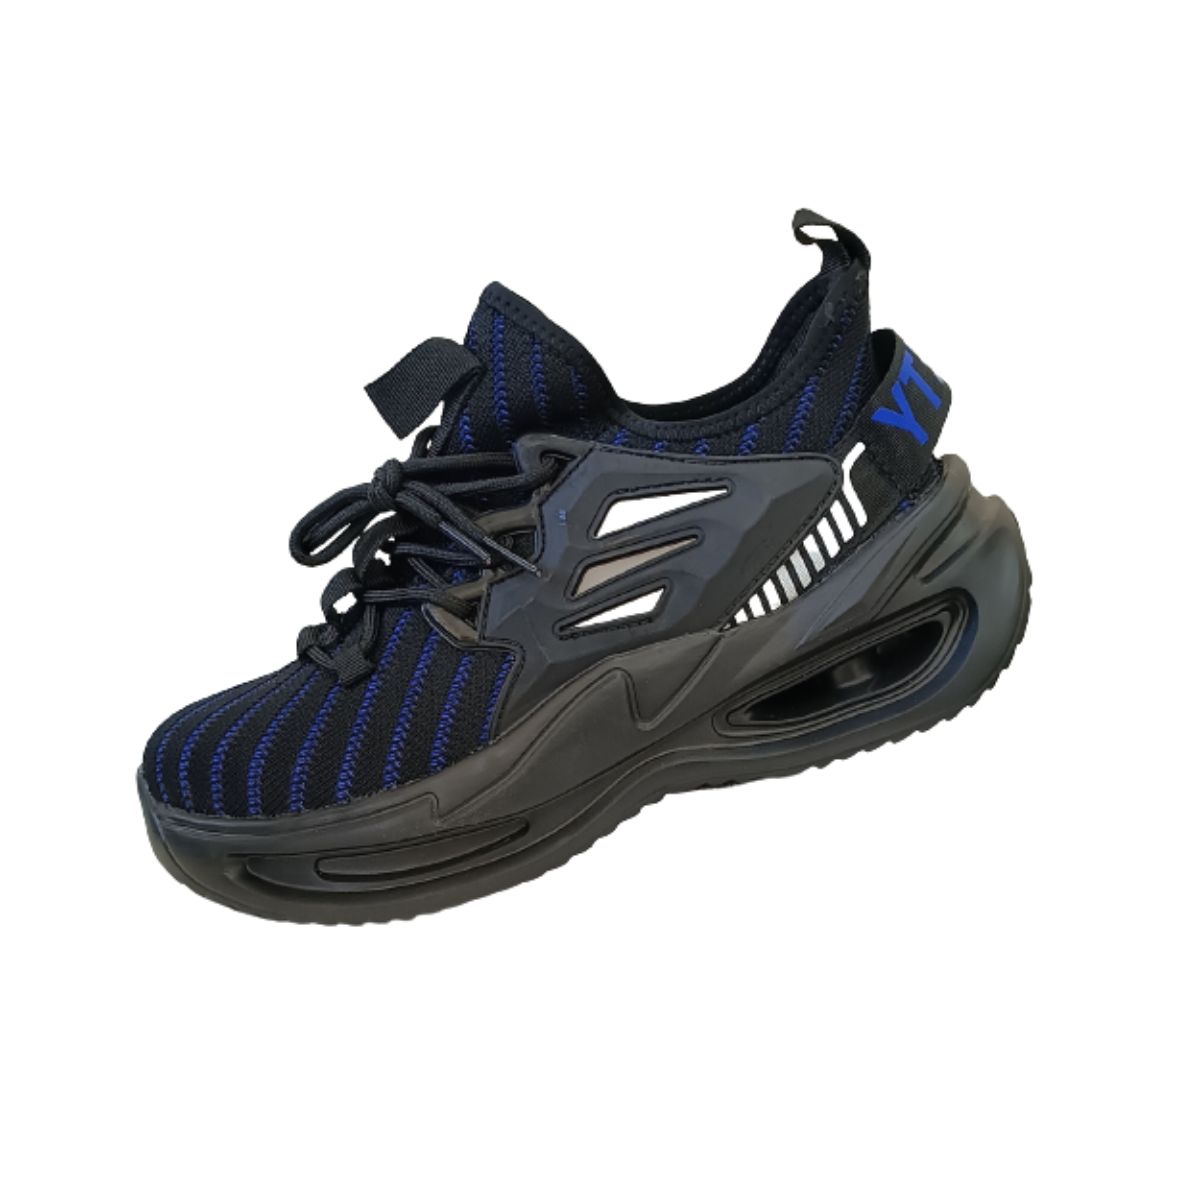 Safety Work Shoe With Steel Toe (Sneaker) - SWS01 - Anti-pierce & Water Repellent - Black & Blue